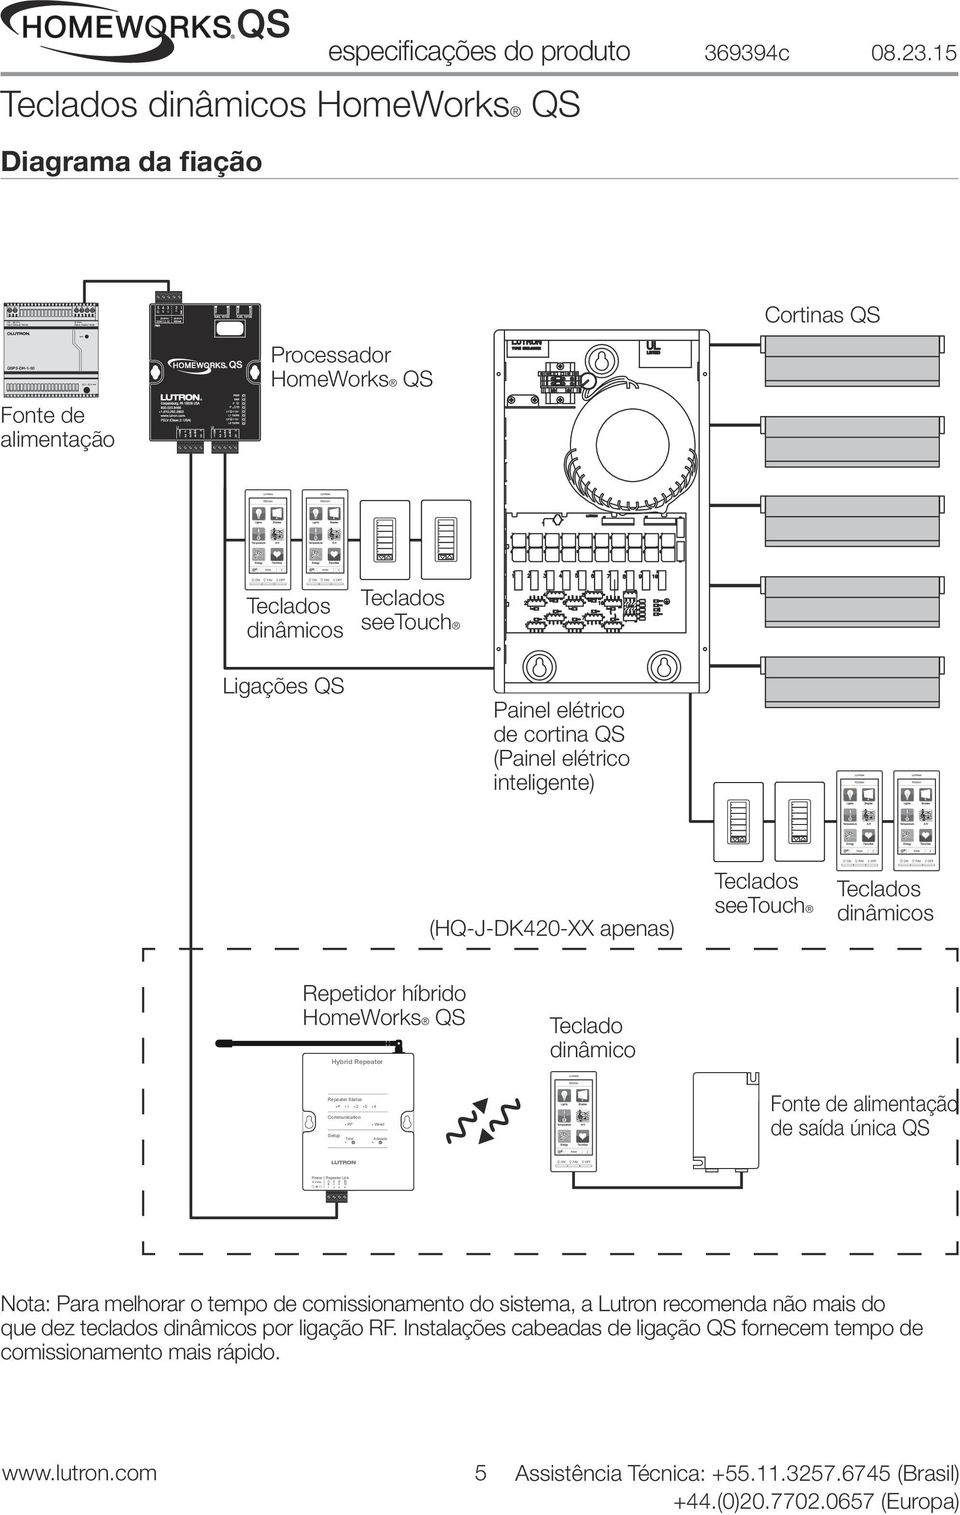 cortina QS (Painel elétrico inteligente) (HQ-J-DK420-XX apenas) seetouch dinâmicos Repetidor híbrido HomeWorks QS Hybrid Repeater Teclado dinâmico Repeater Status P Communication Setup Test 1